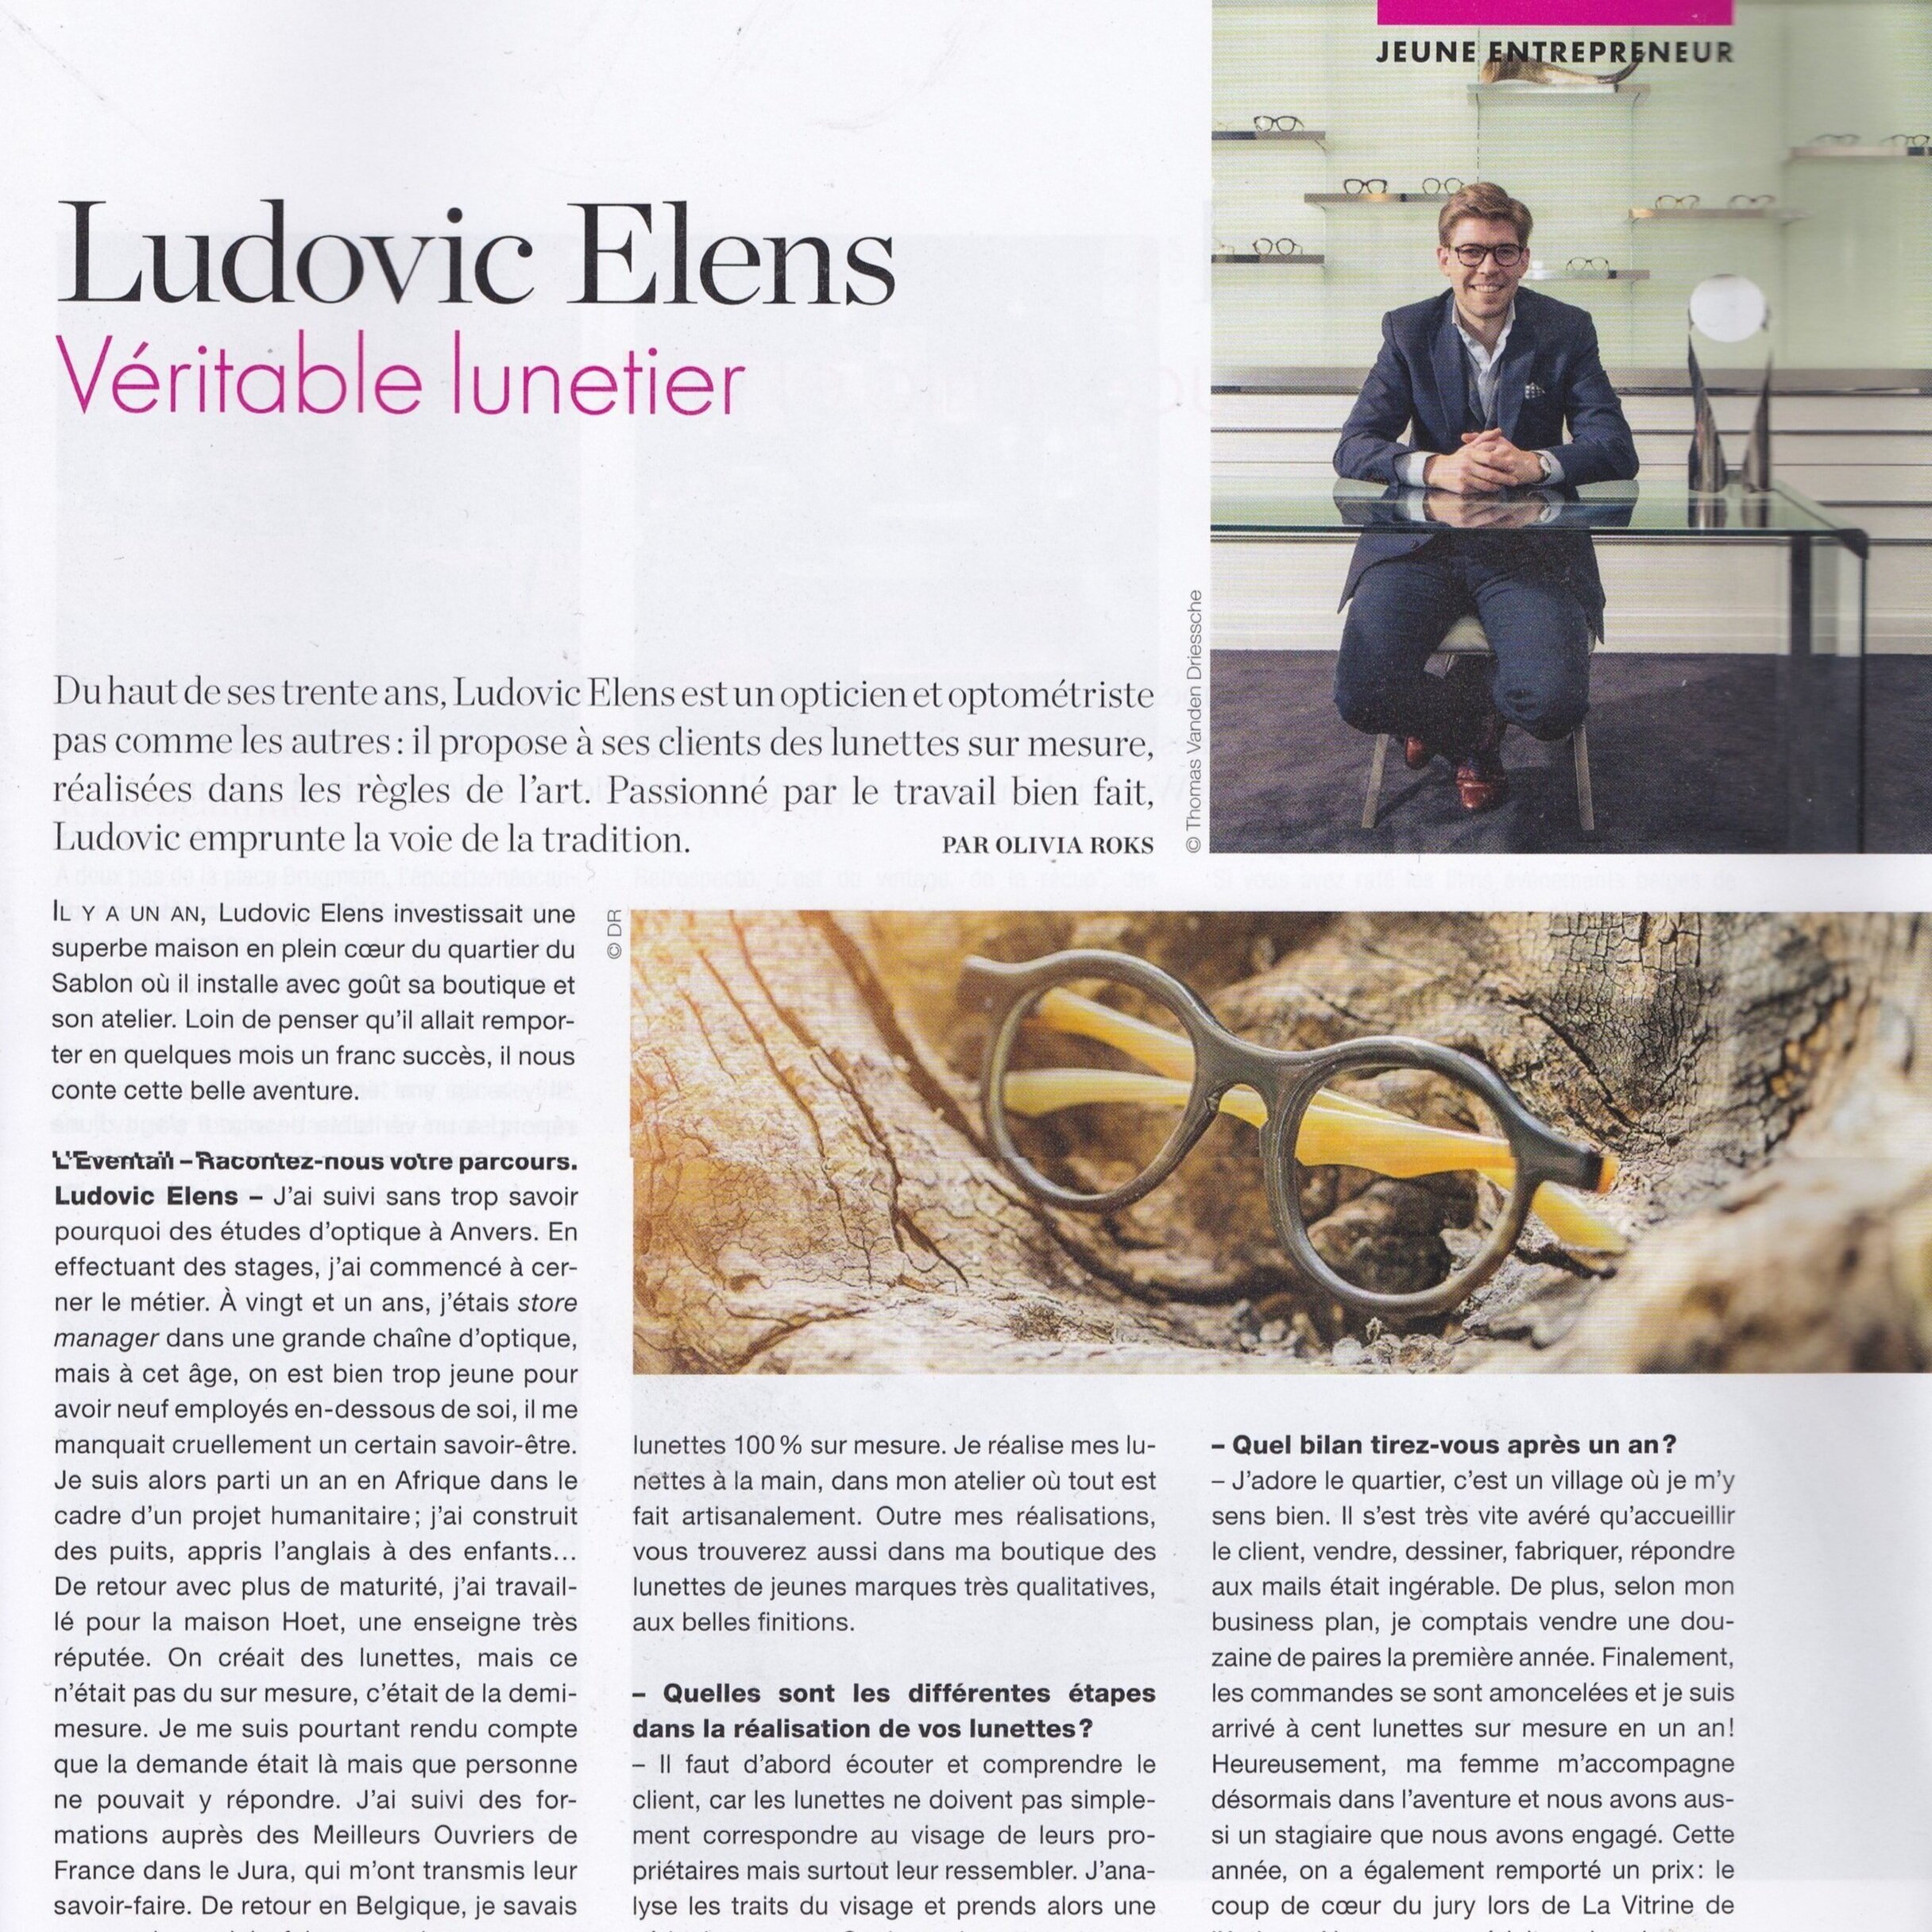 Ludovic Elens genuine eyewear maker